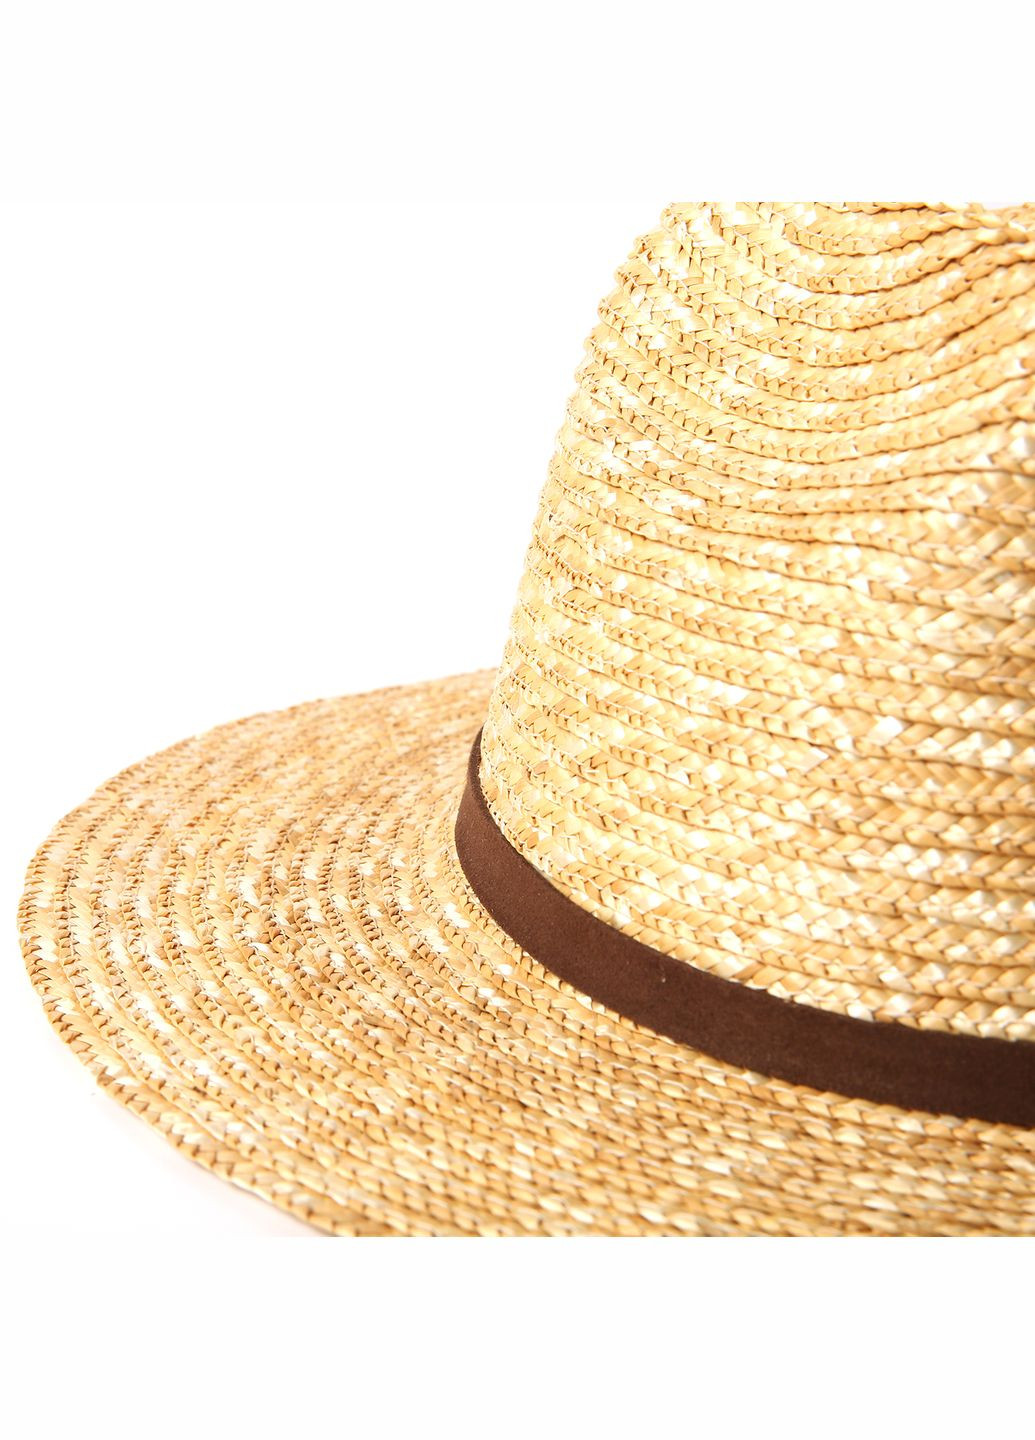 Шляпа федора мужская солома бежевая MADISON 818-225 LuckyLOOK 818-225м (289478420)